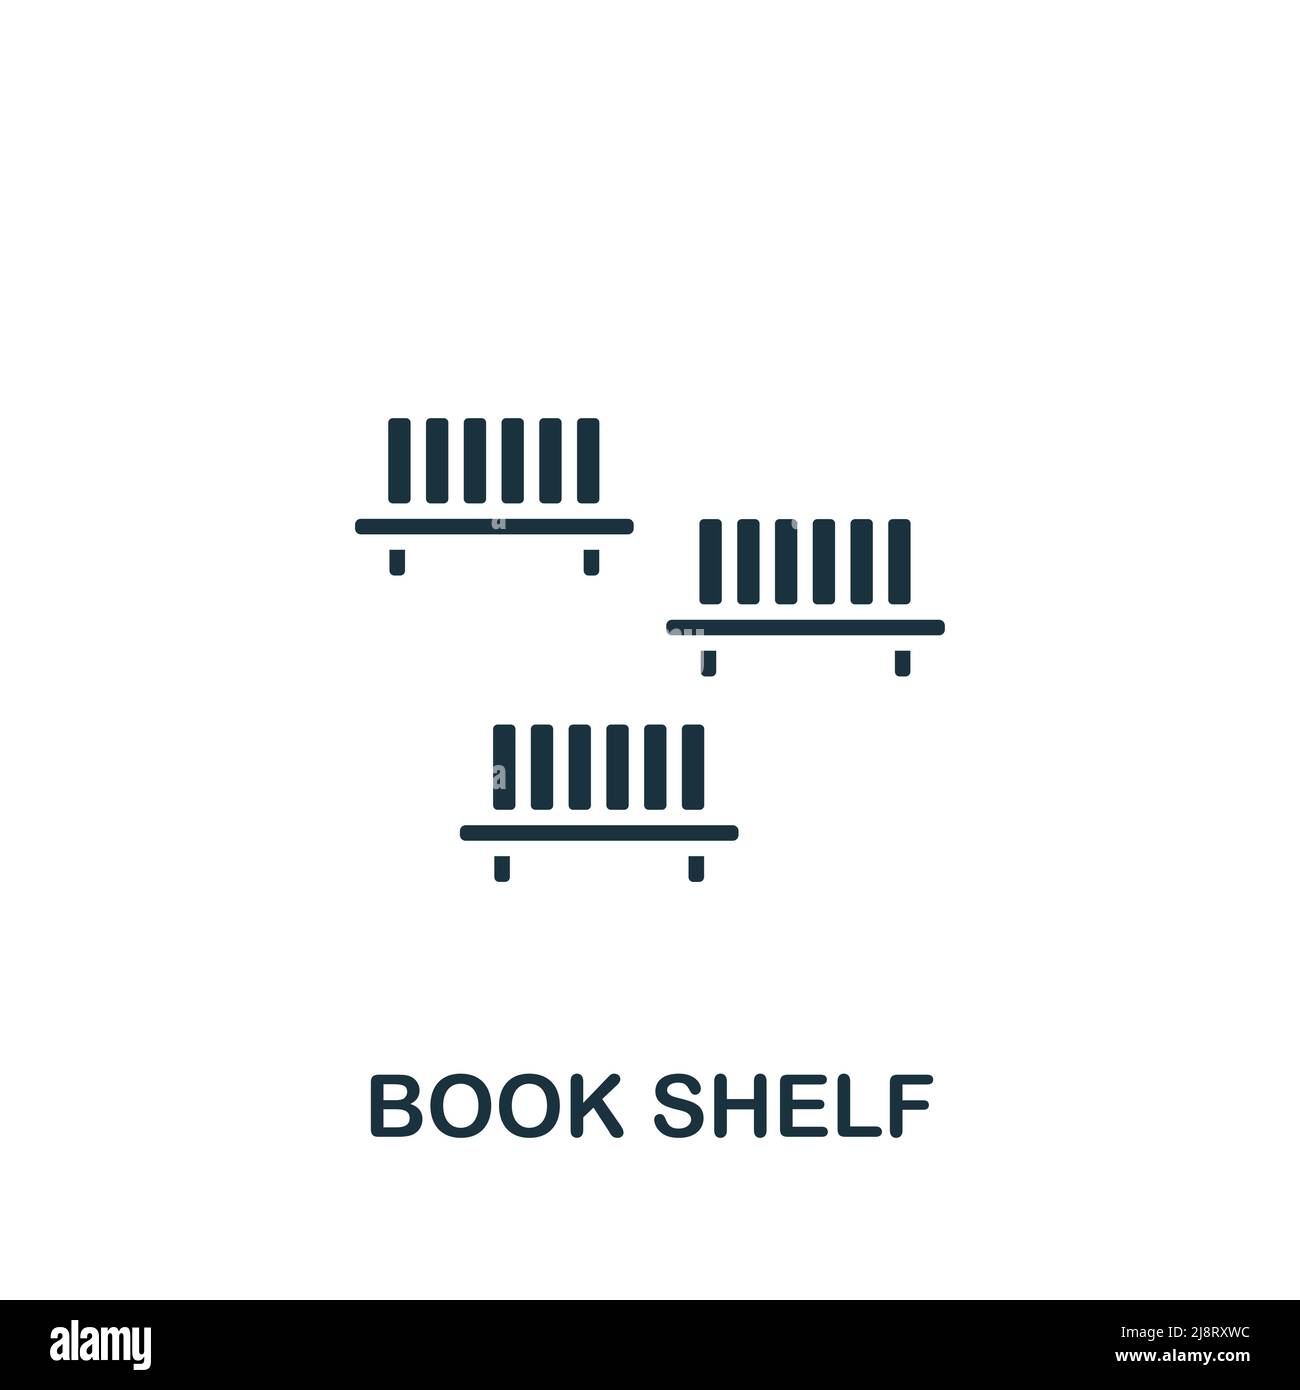 Book Shelf icon. Monochrome simple Interior Furniture icon for templates, web design and infographics Stock Vector